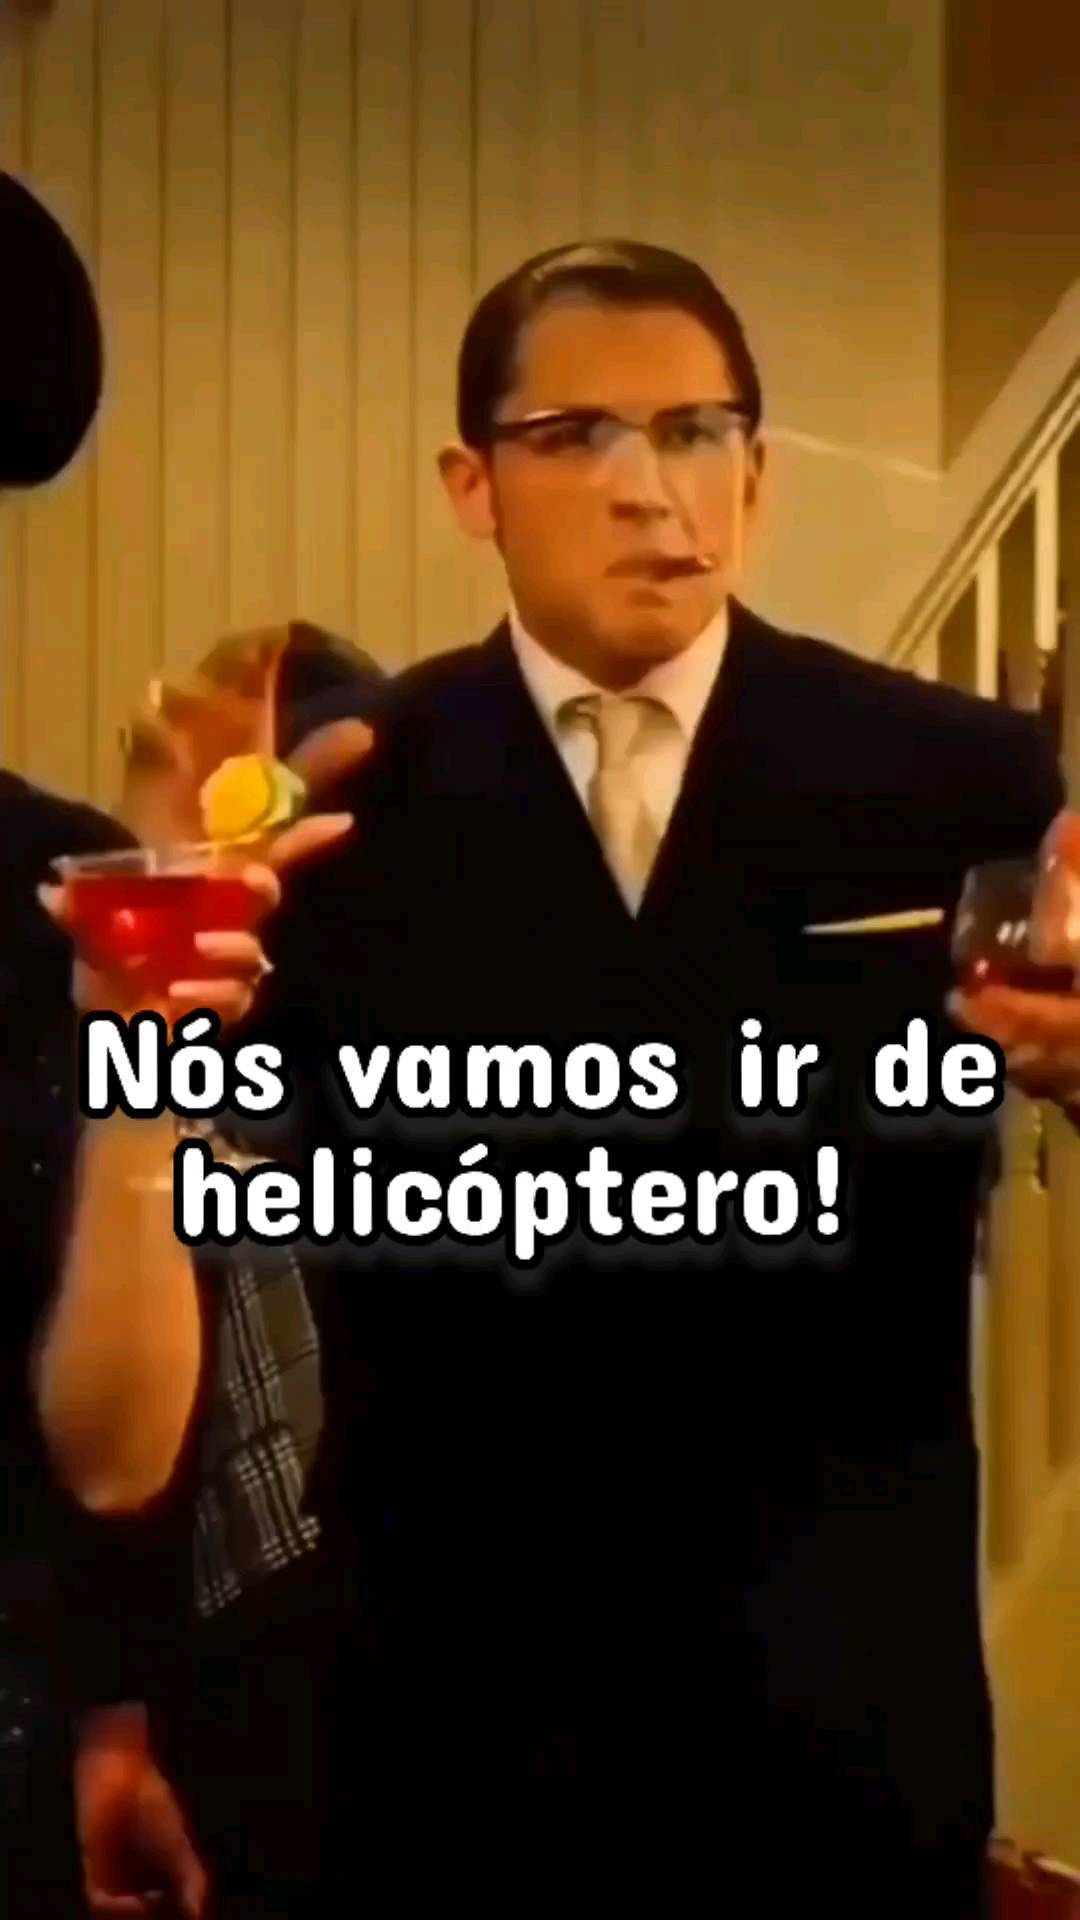 Nós vamos ir de helicóptero! 
Como??
🚁🚁🚁🚁
Bora voaaar!! 
.
.
.
#embarquefloripa #memes #memesinstagram #viral #viralreels #helicóptero #helicopter #helicoptero